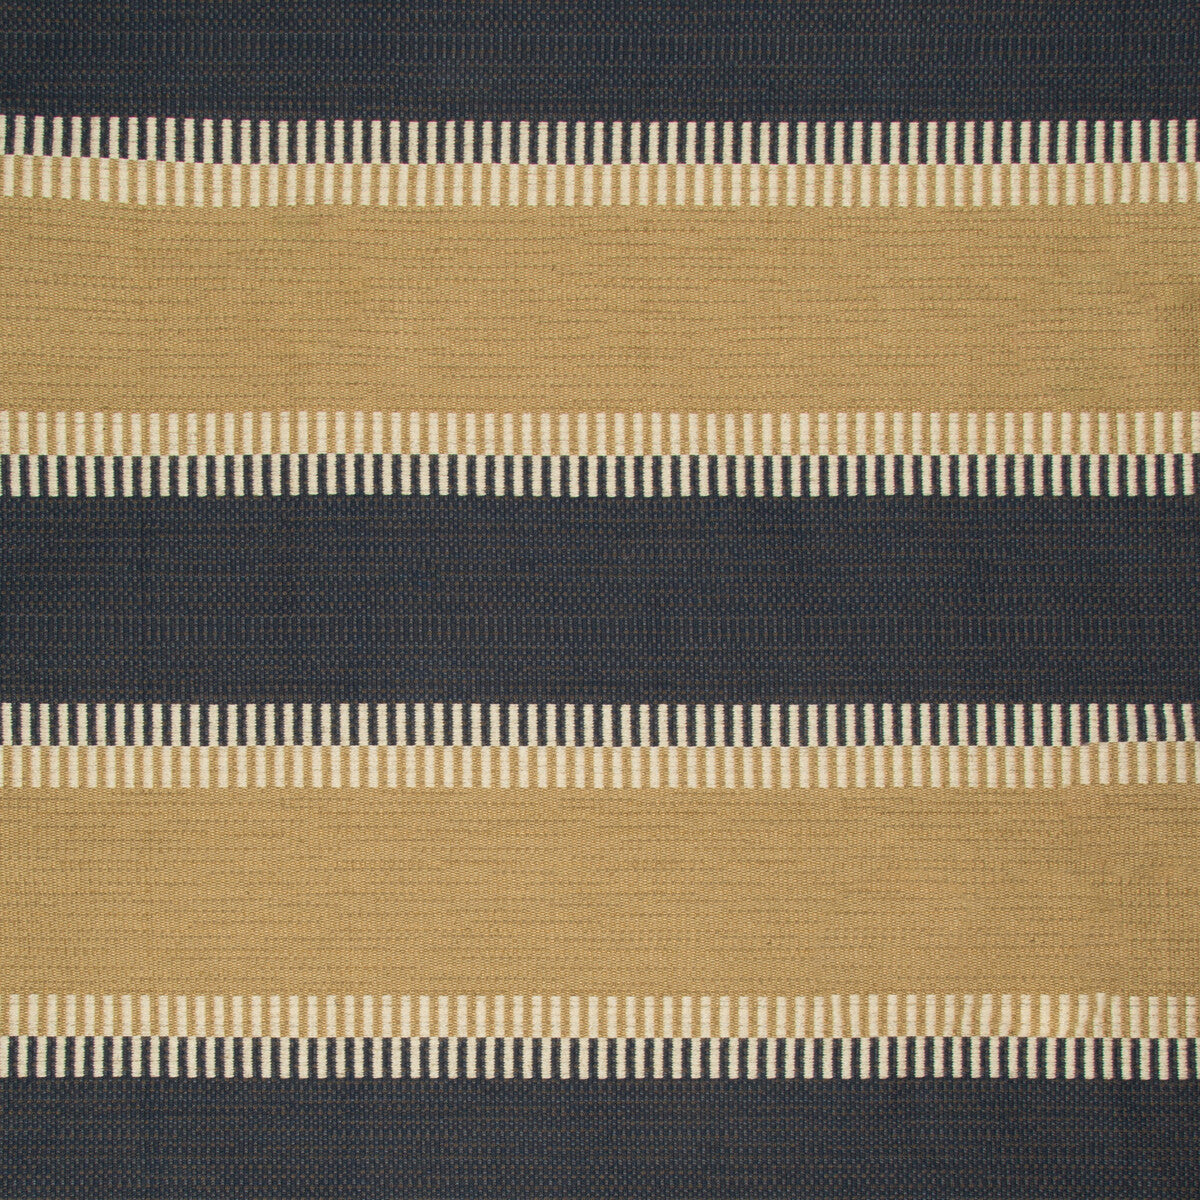 Dorinda Stripe fabric in camel/indigo color - pattern 2012128.650.0 - by Lee Jofa in the Merkato collection